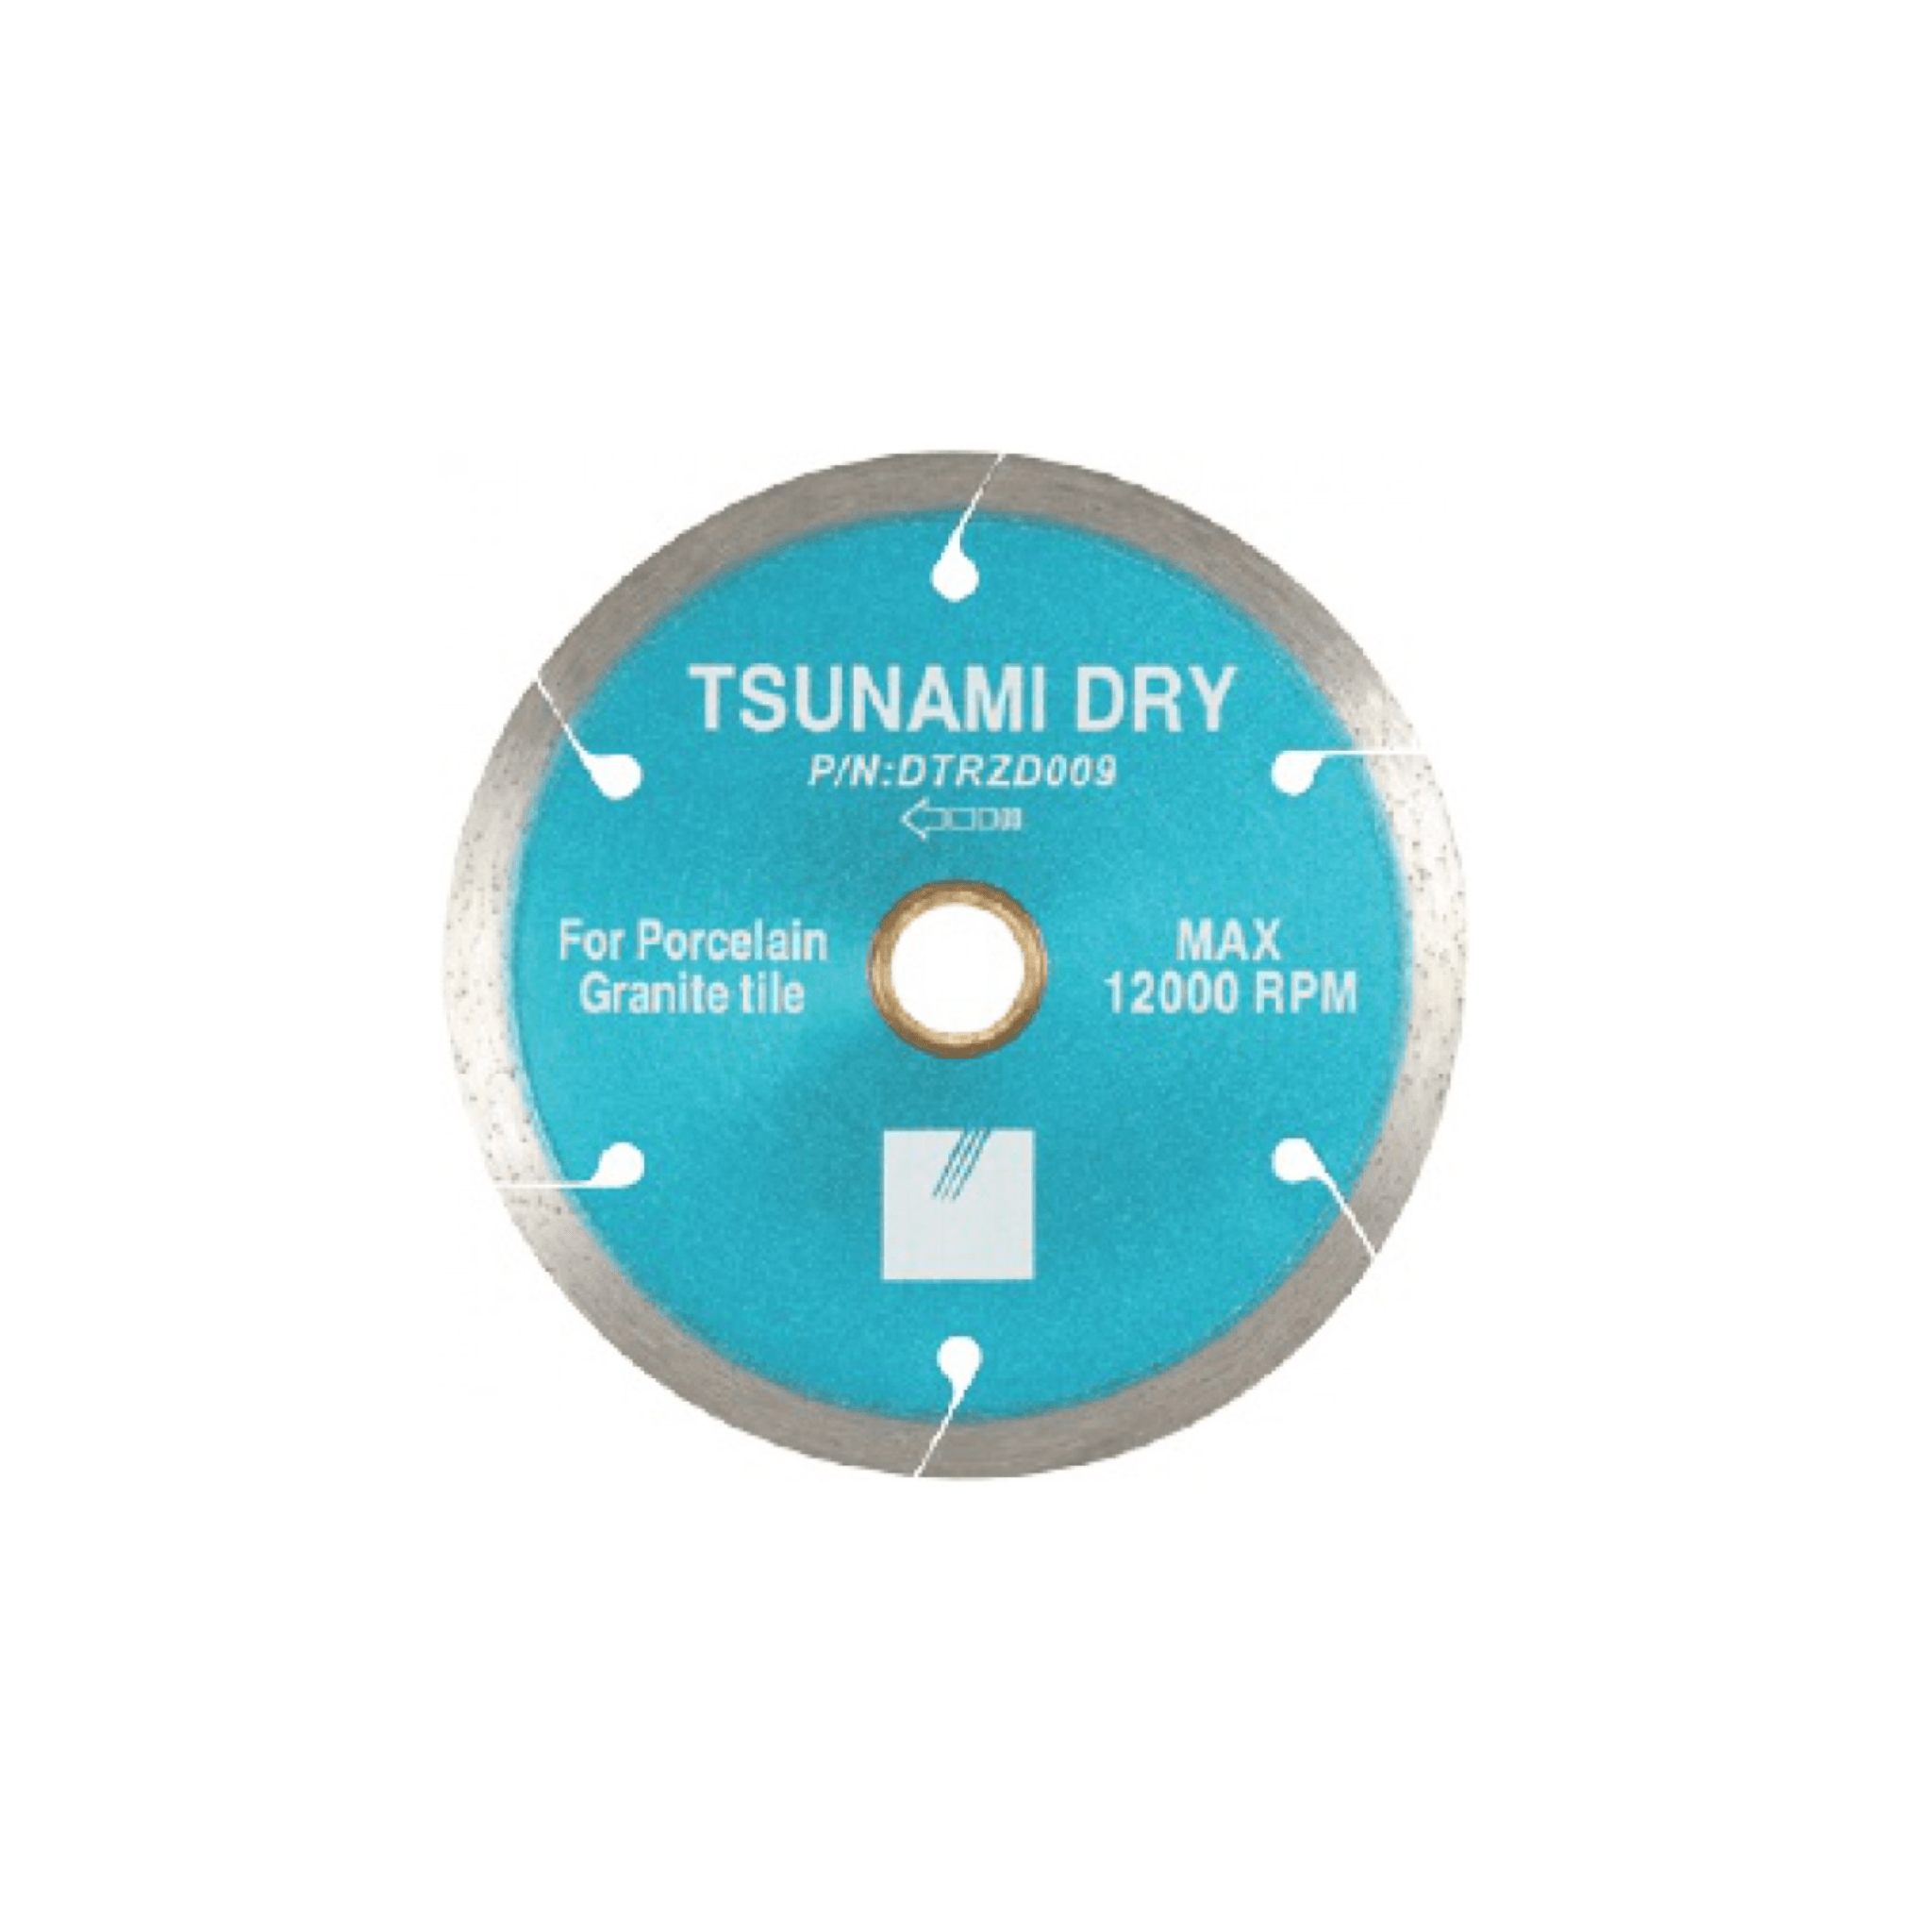 Disco Tsunami Dry 7" - Direct Stone Tool Supply, Inc